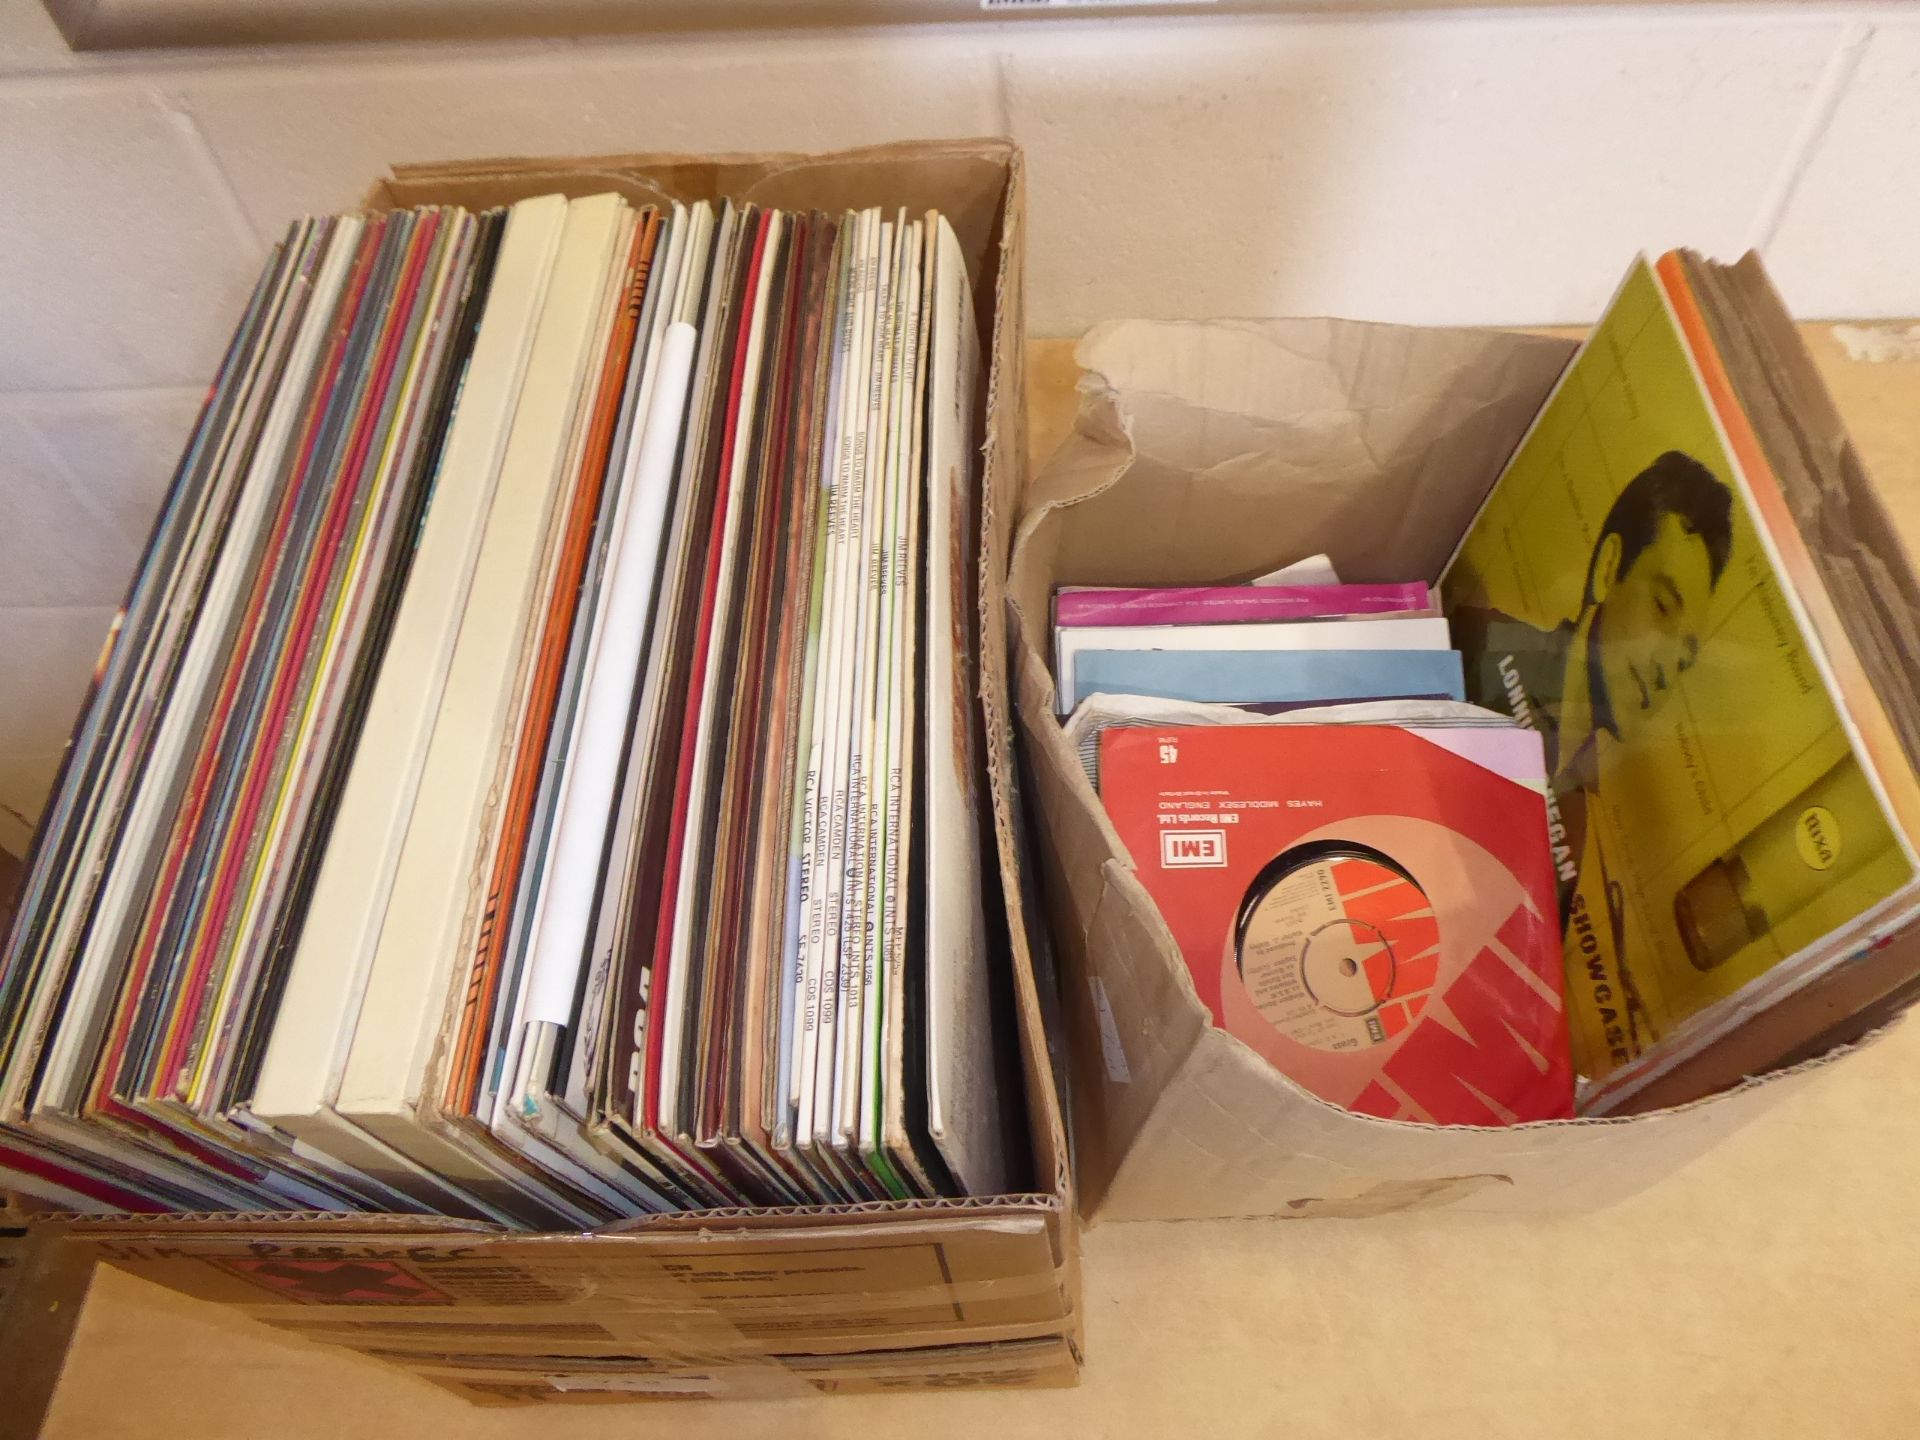 2 boxes of vinyl records